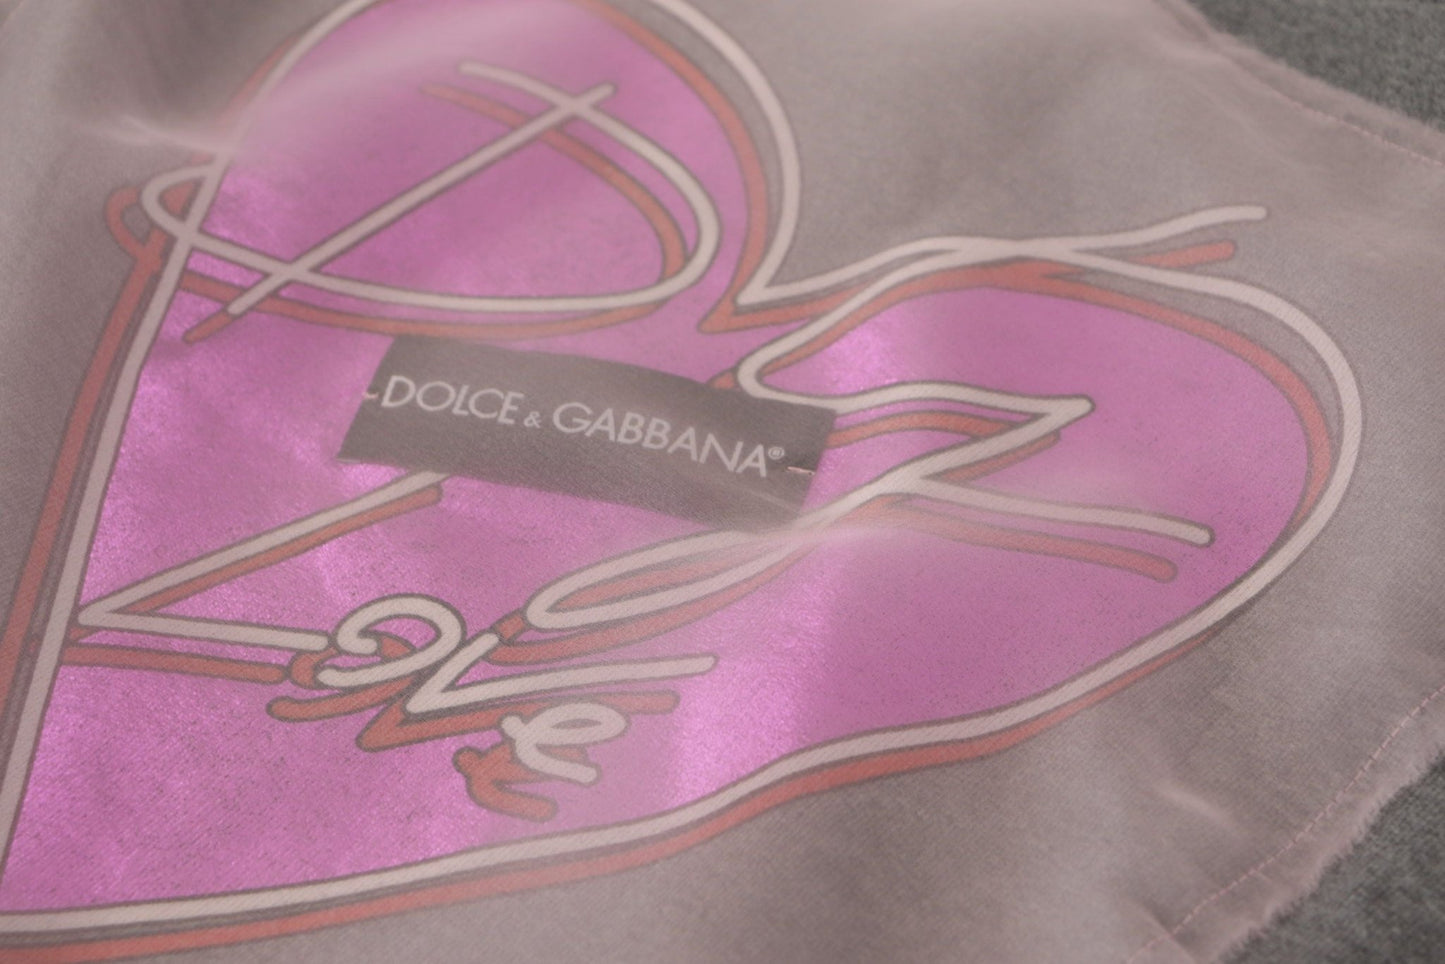 Dolce & Gabbana Grey Heart Pink Limited Edition Top T-shirt